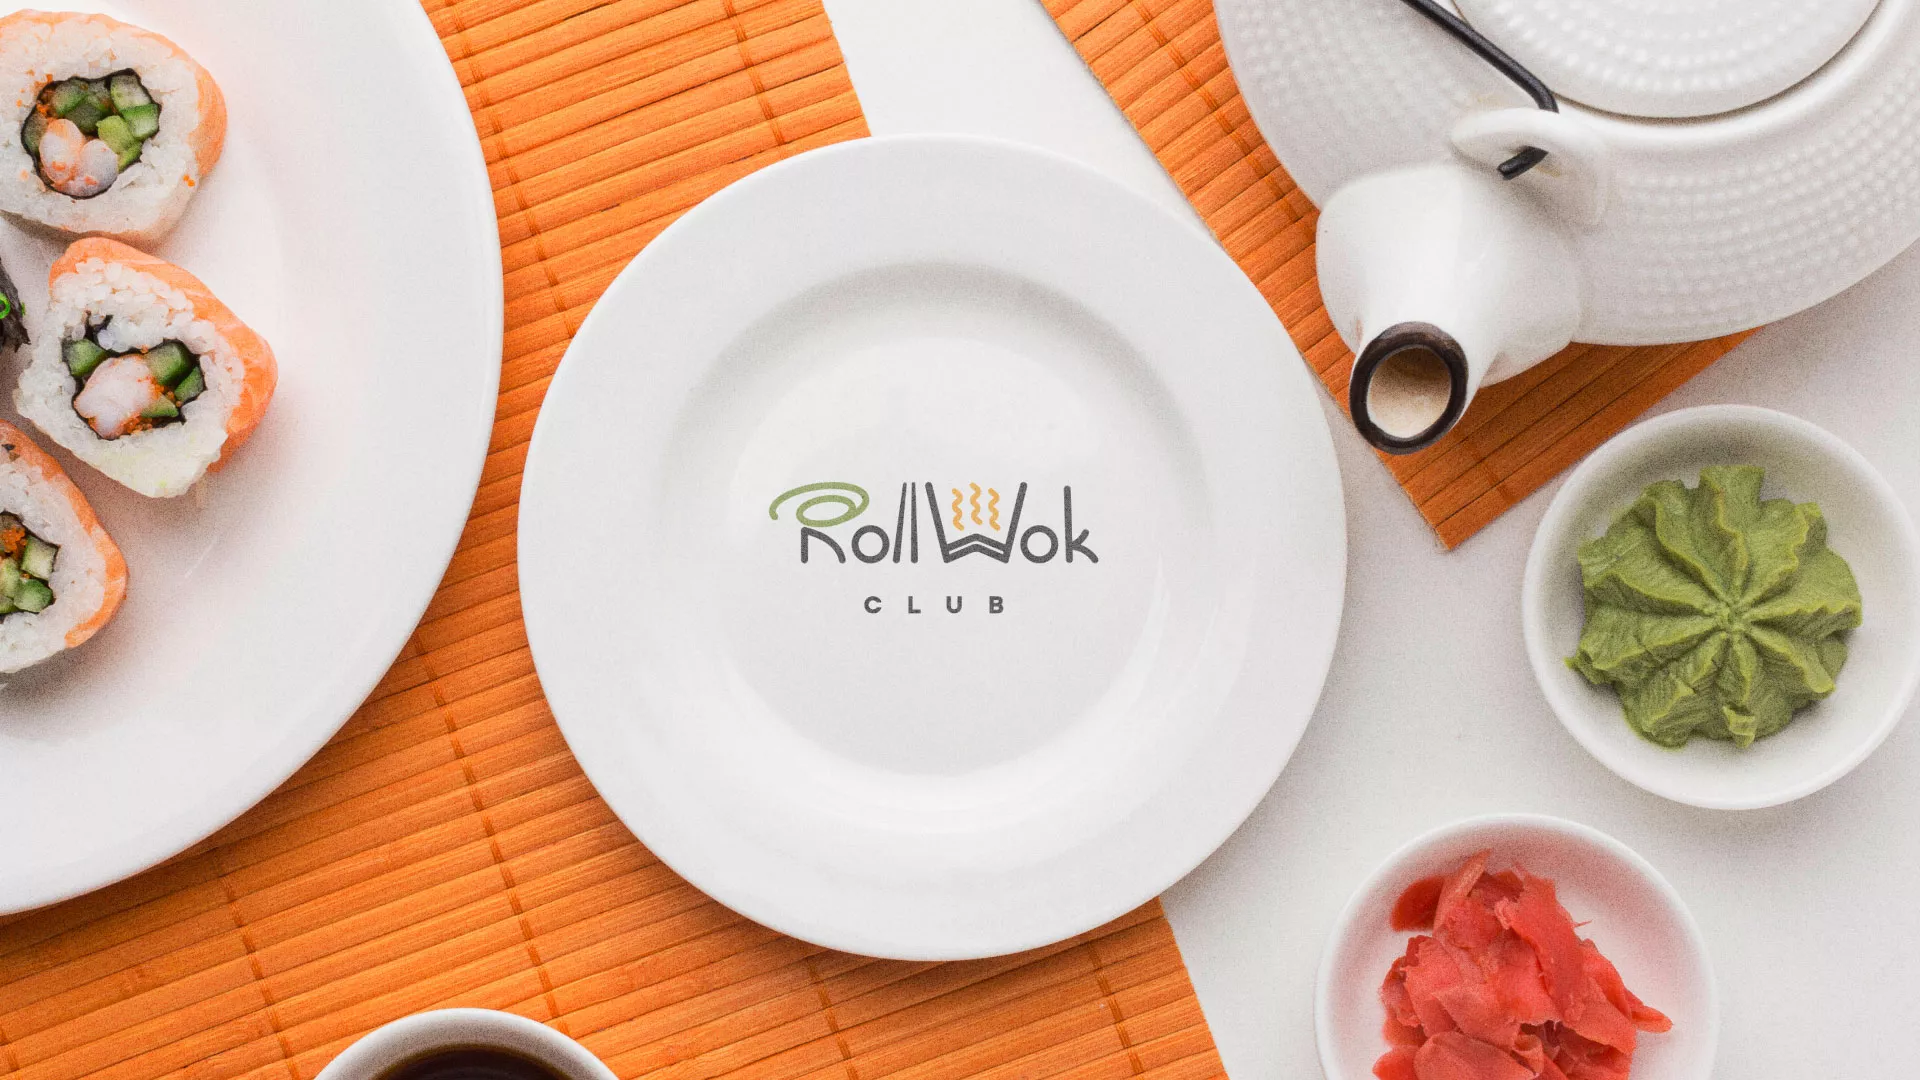 Разработка логотипа и фирменного стиля суши-бара «Roll Wok Club» в Симферополе